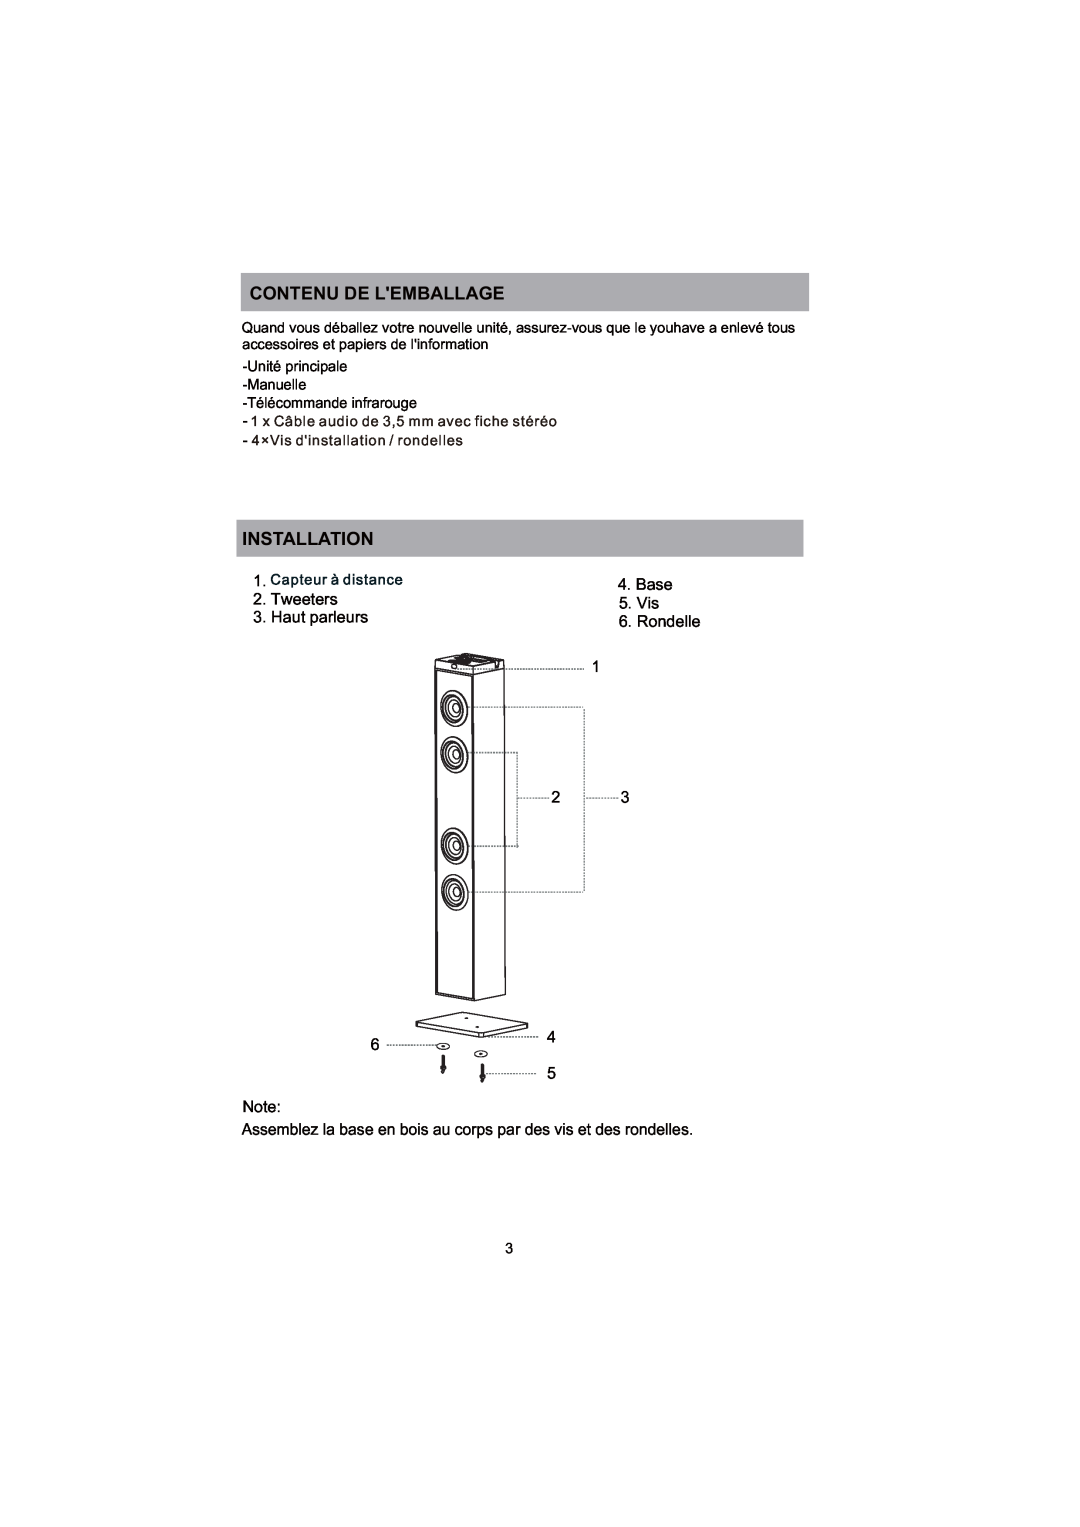 ProScan PSP288-PL user manual Contenu De Lemballage, Installation 